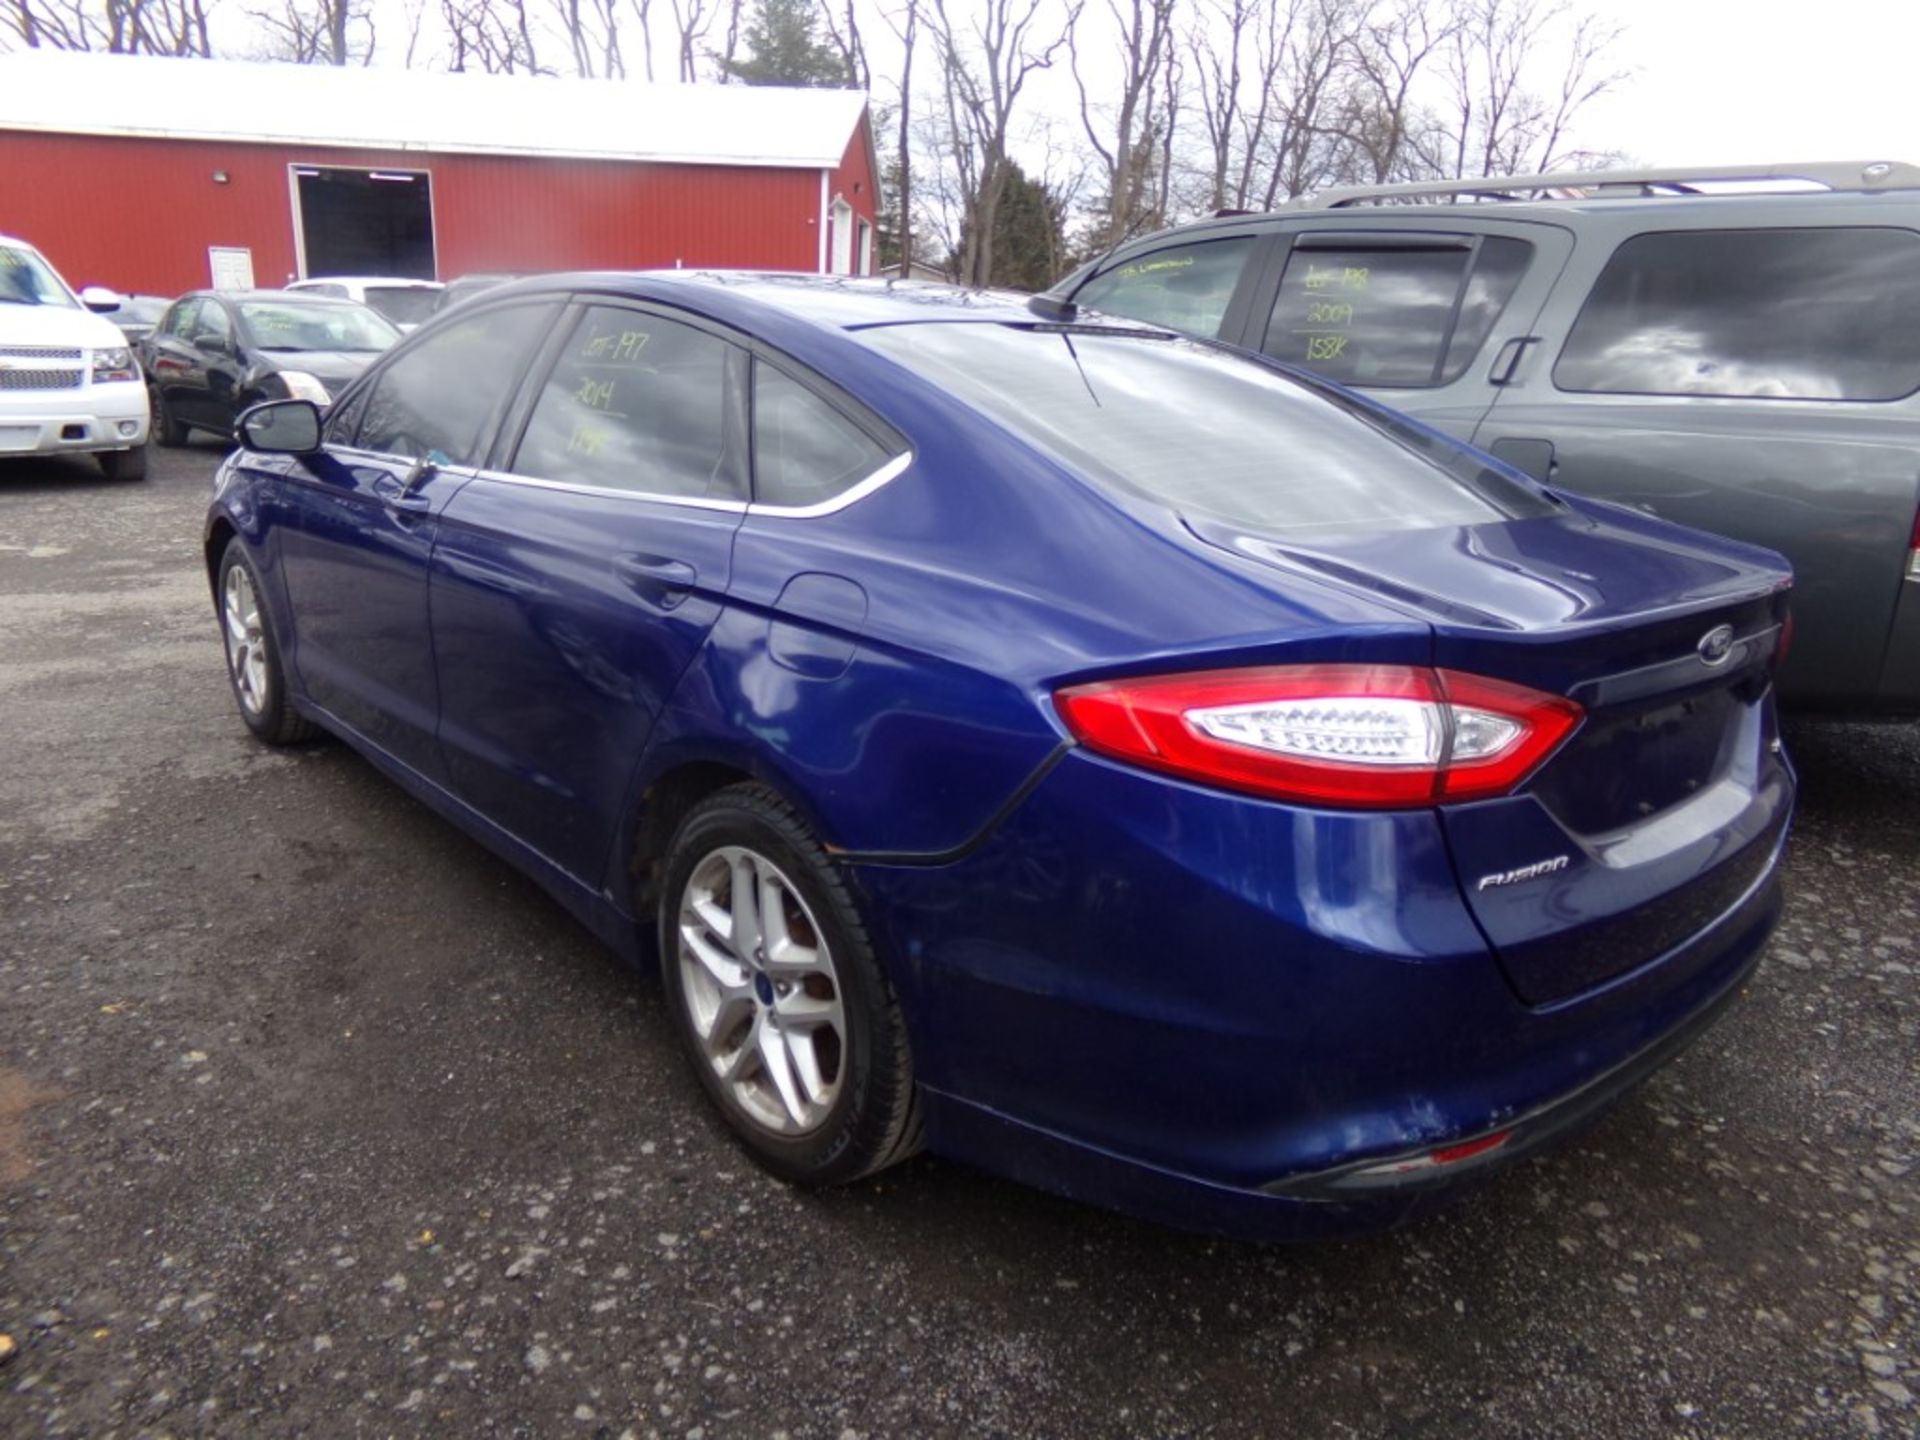 2014 Ford Fusion SE, Blue, 174,739 Miles, VIN#1FA6P0H7XE5365423, AIR BAG LIGHT IS ON, MINOR DAMAGE - Bild 3 aus 18